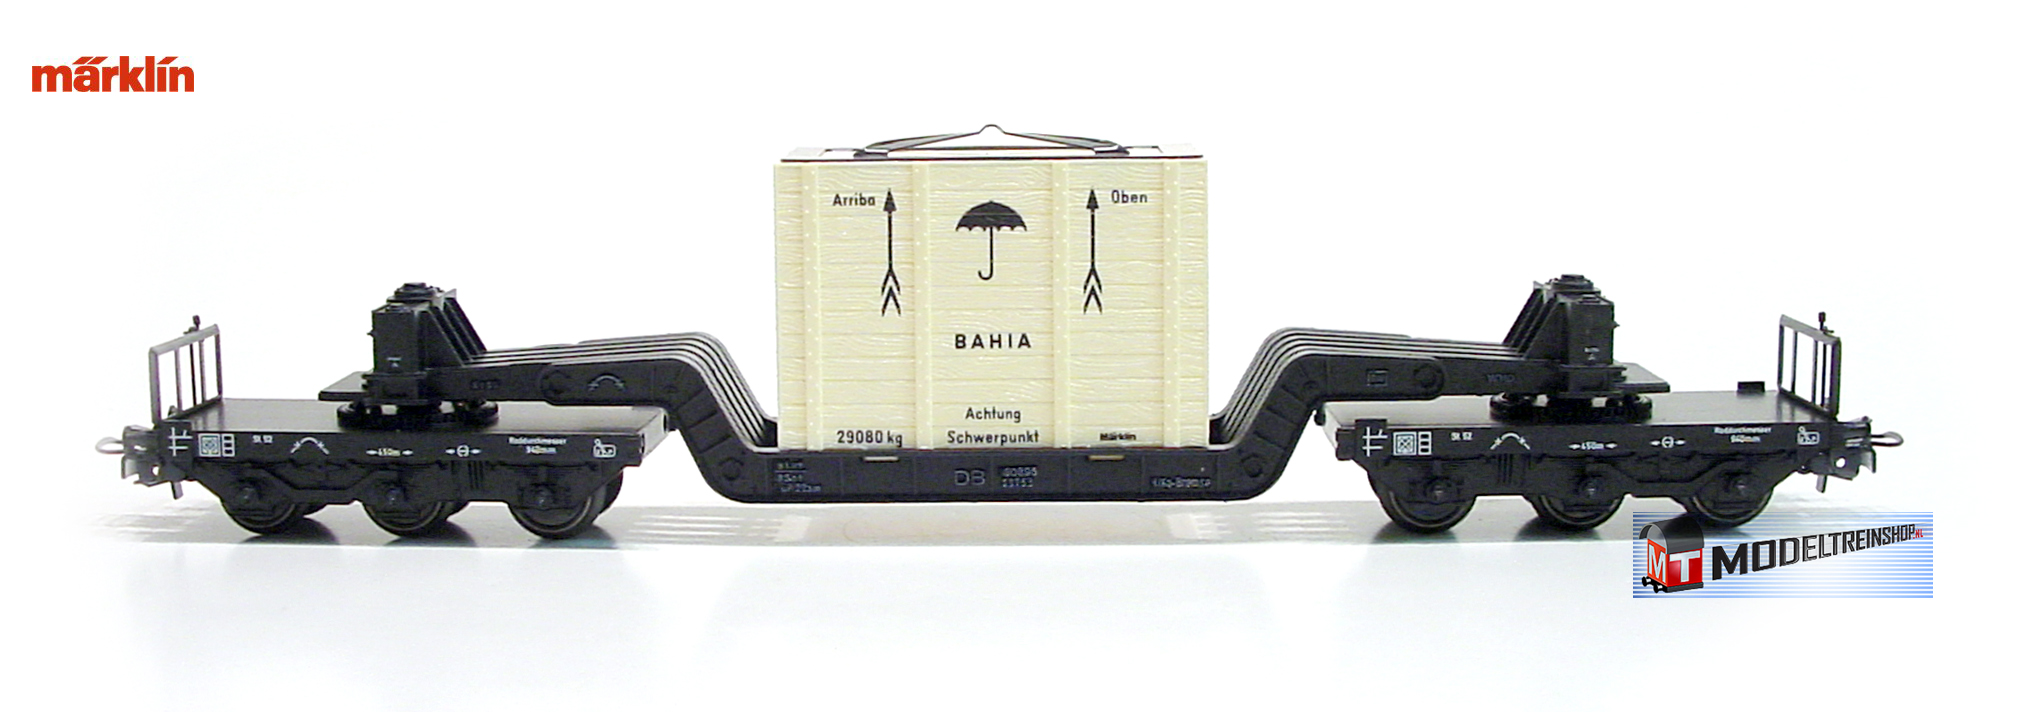 Marklin H0 4618 V5 Dieplader met Kist SST 53 - Modeltreinshop